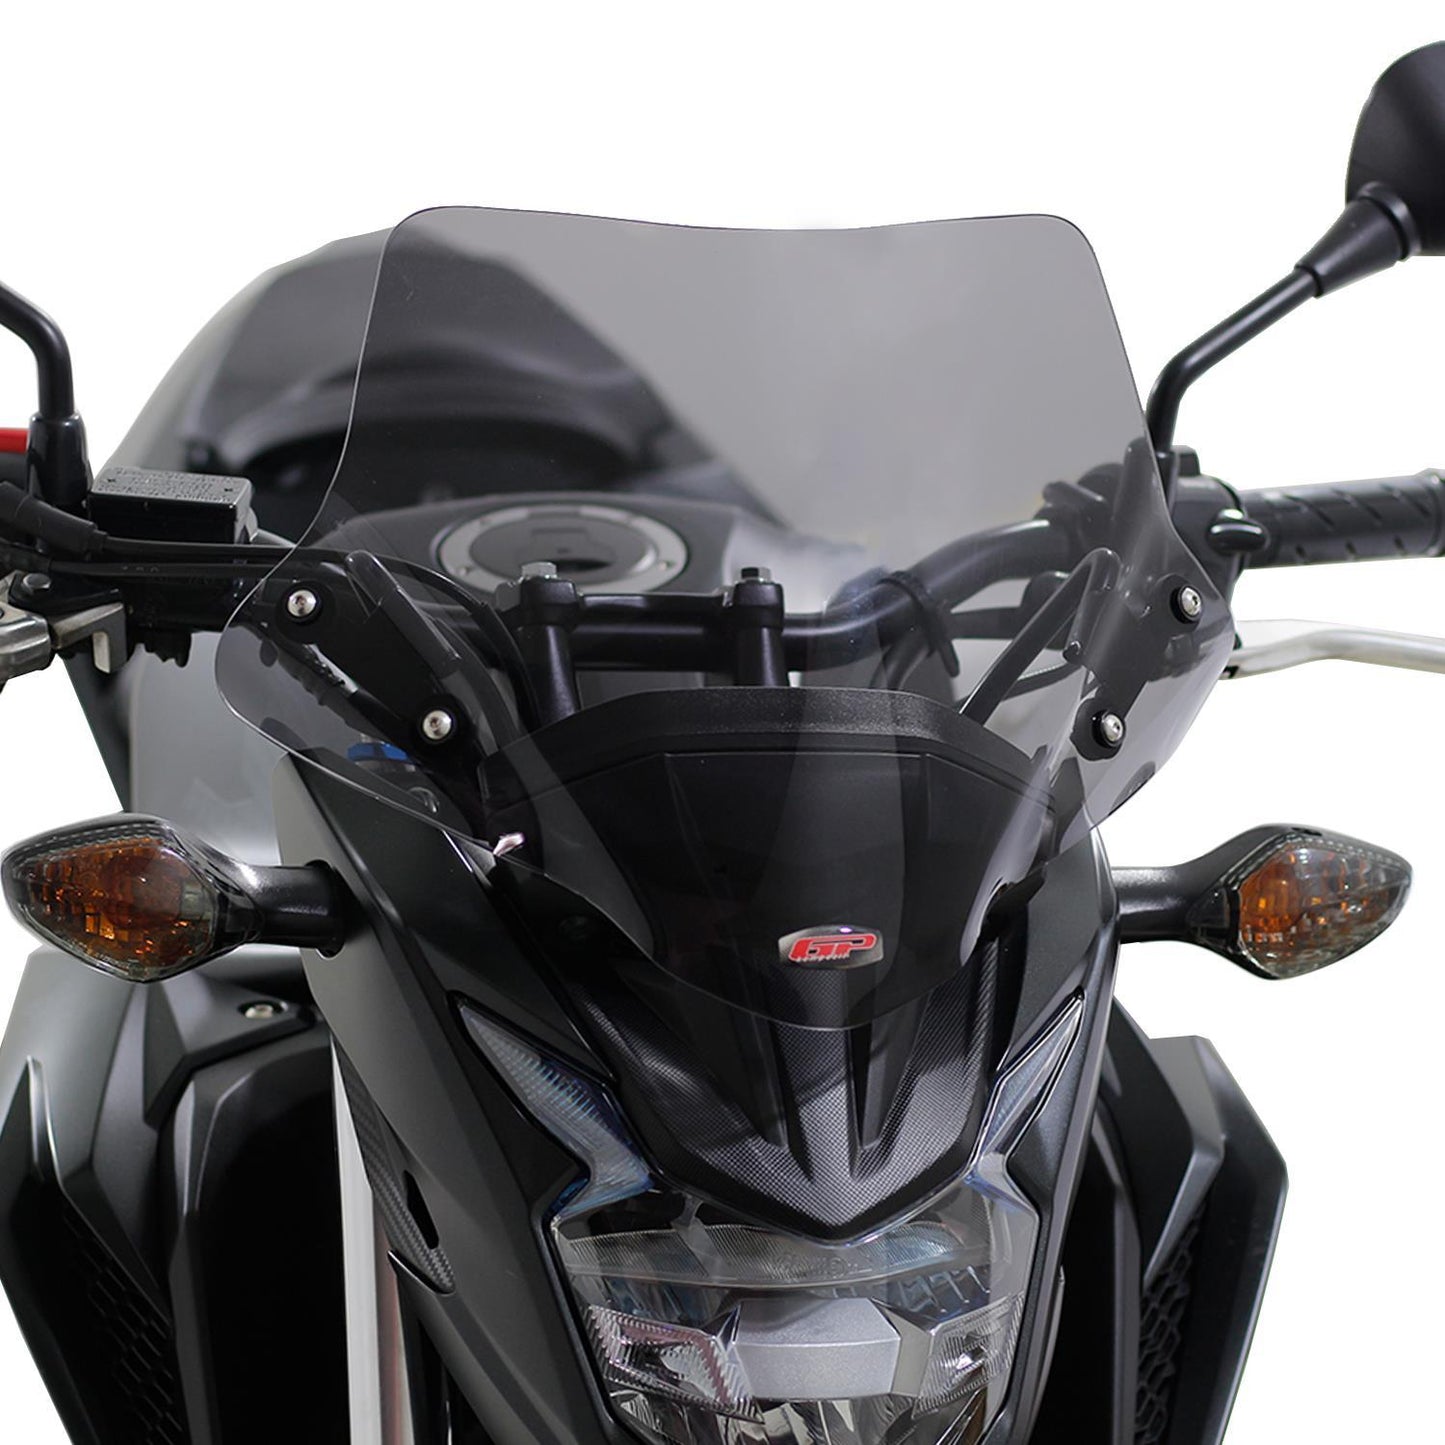 Honda CB 650F windscreen 2014-16 smoke